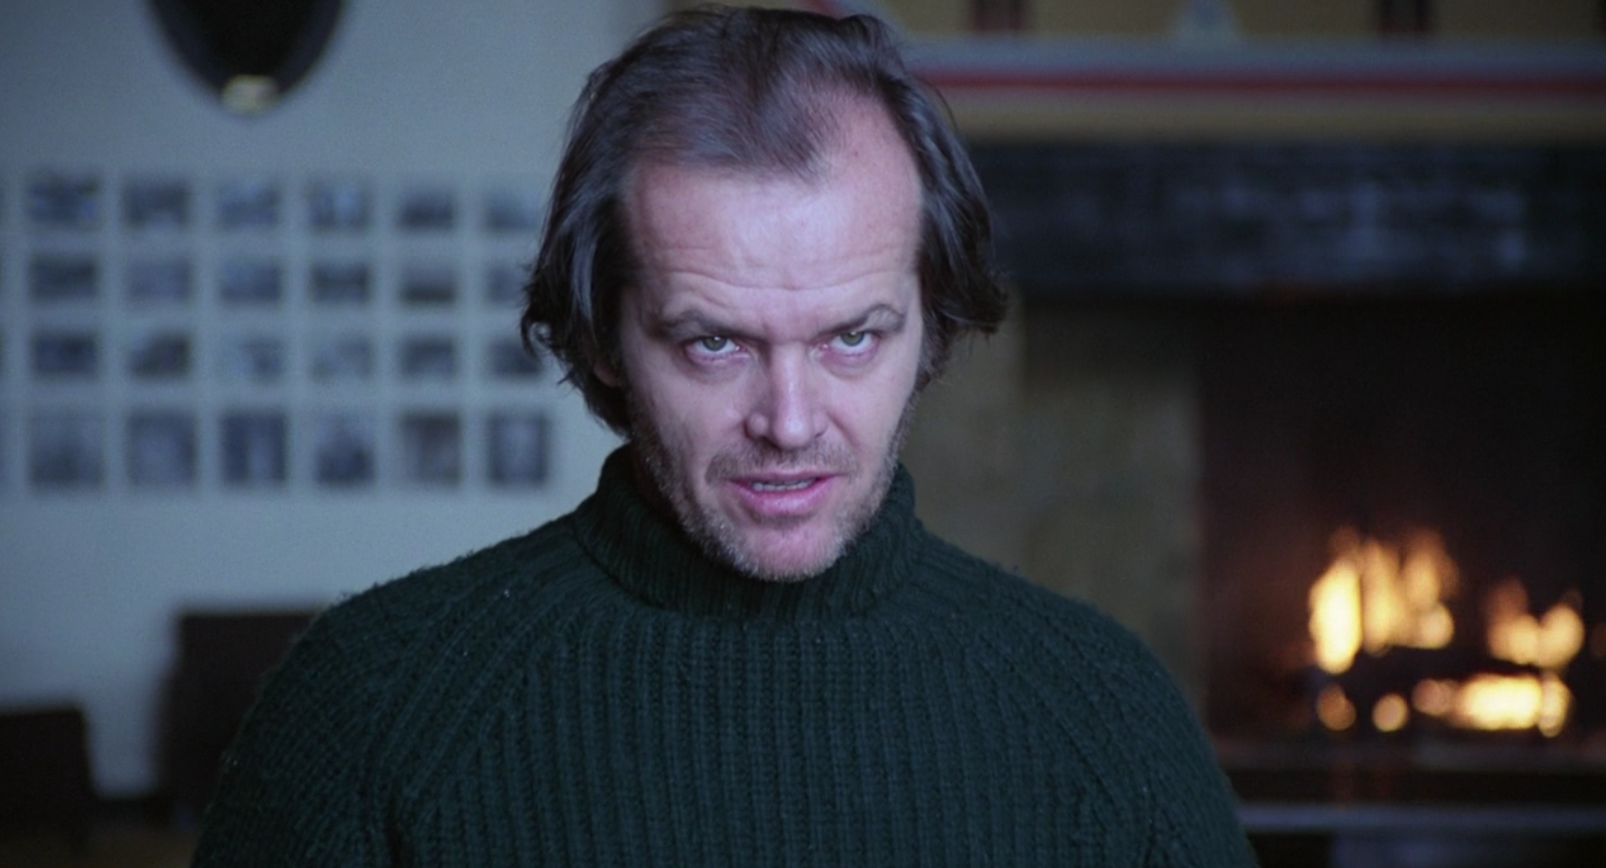 Descent into madness - Jack Nicholson plays it amazingly